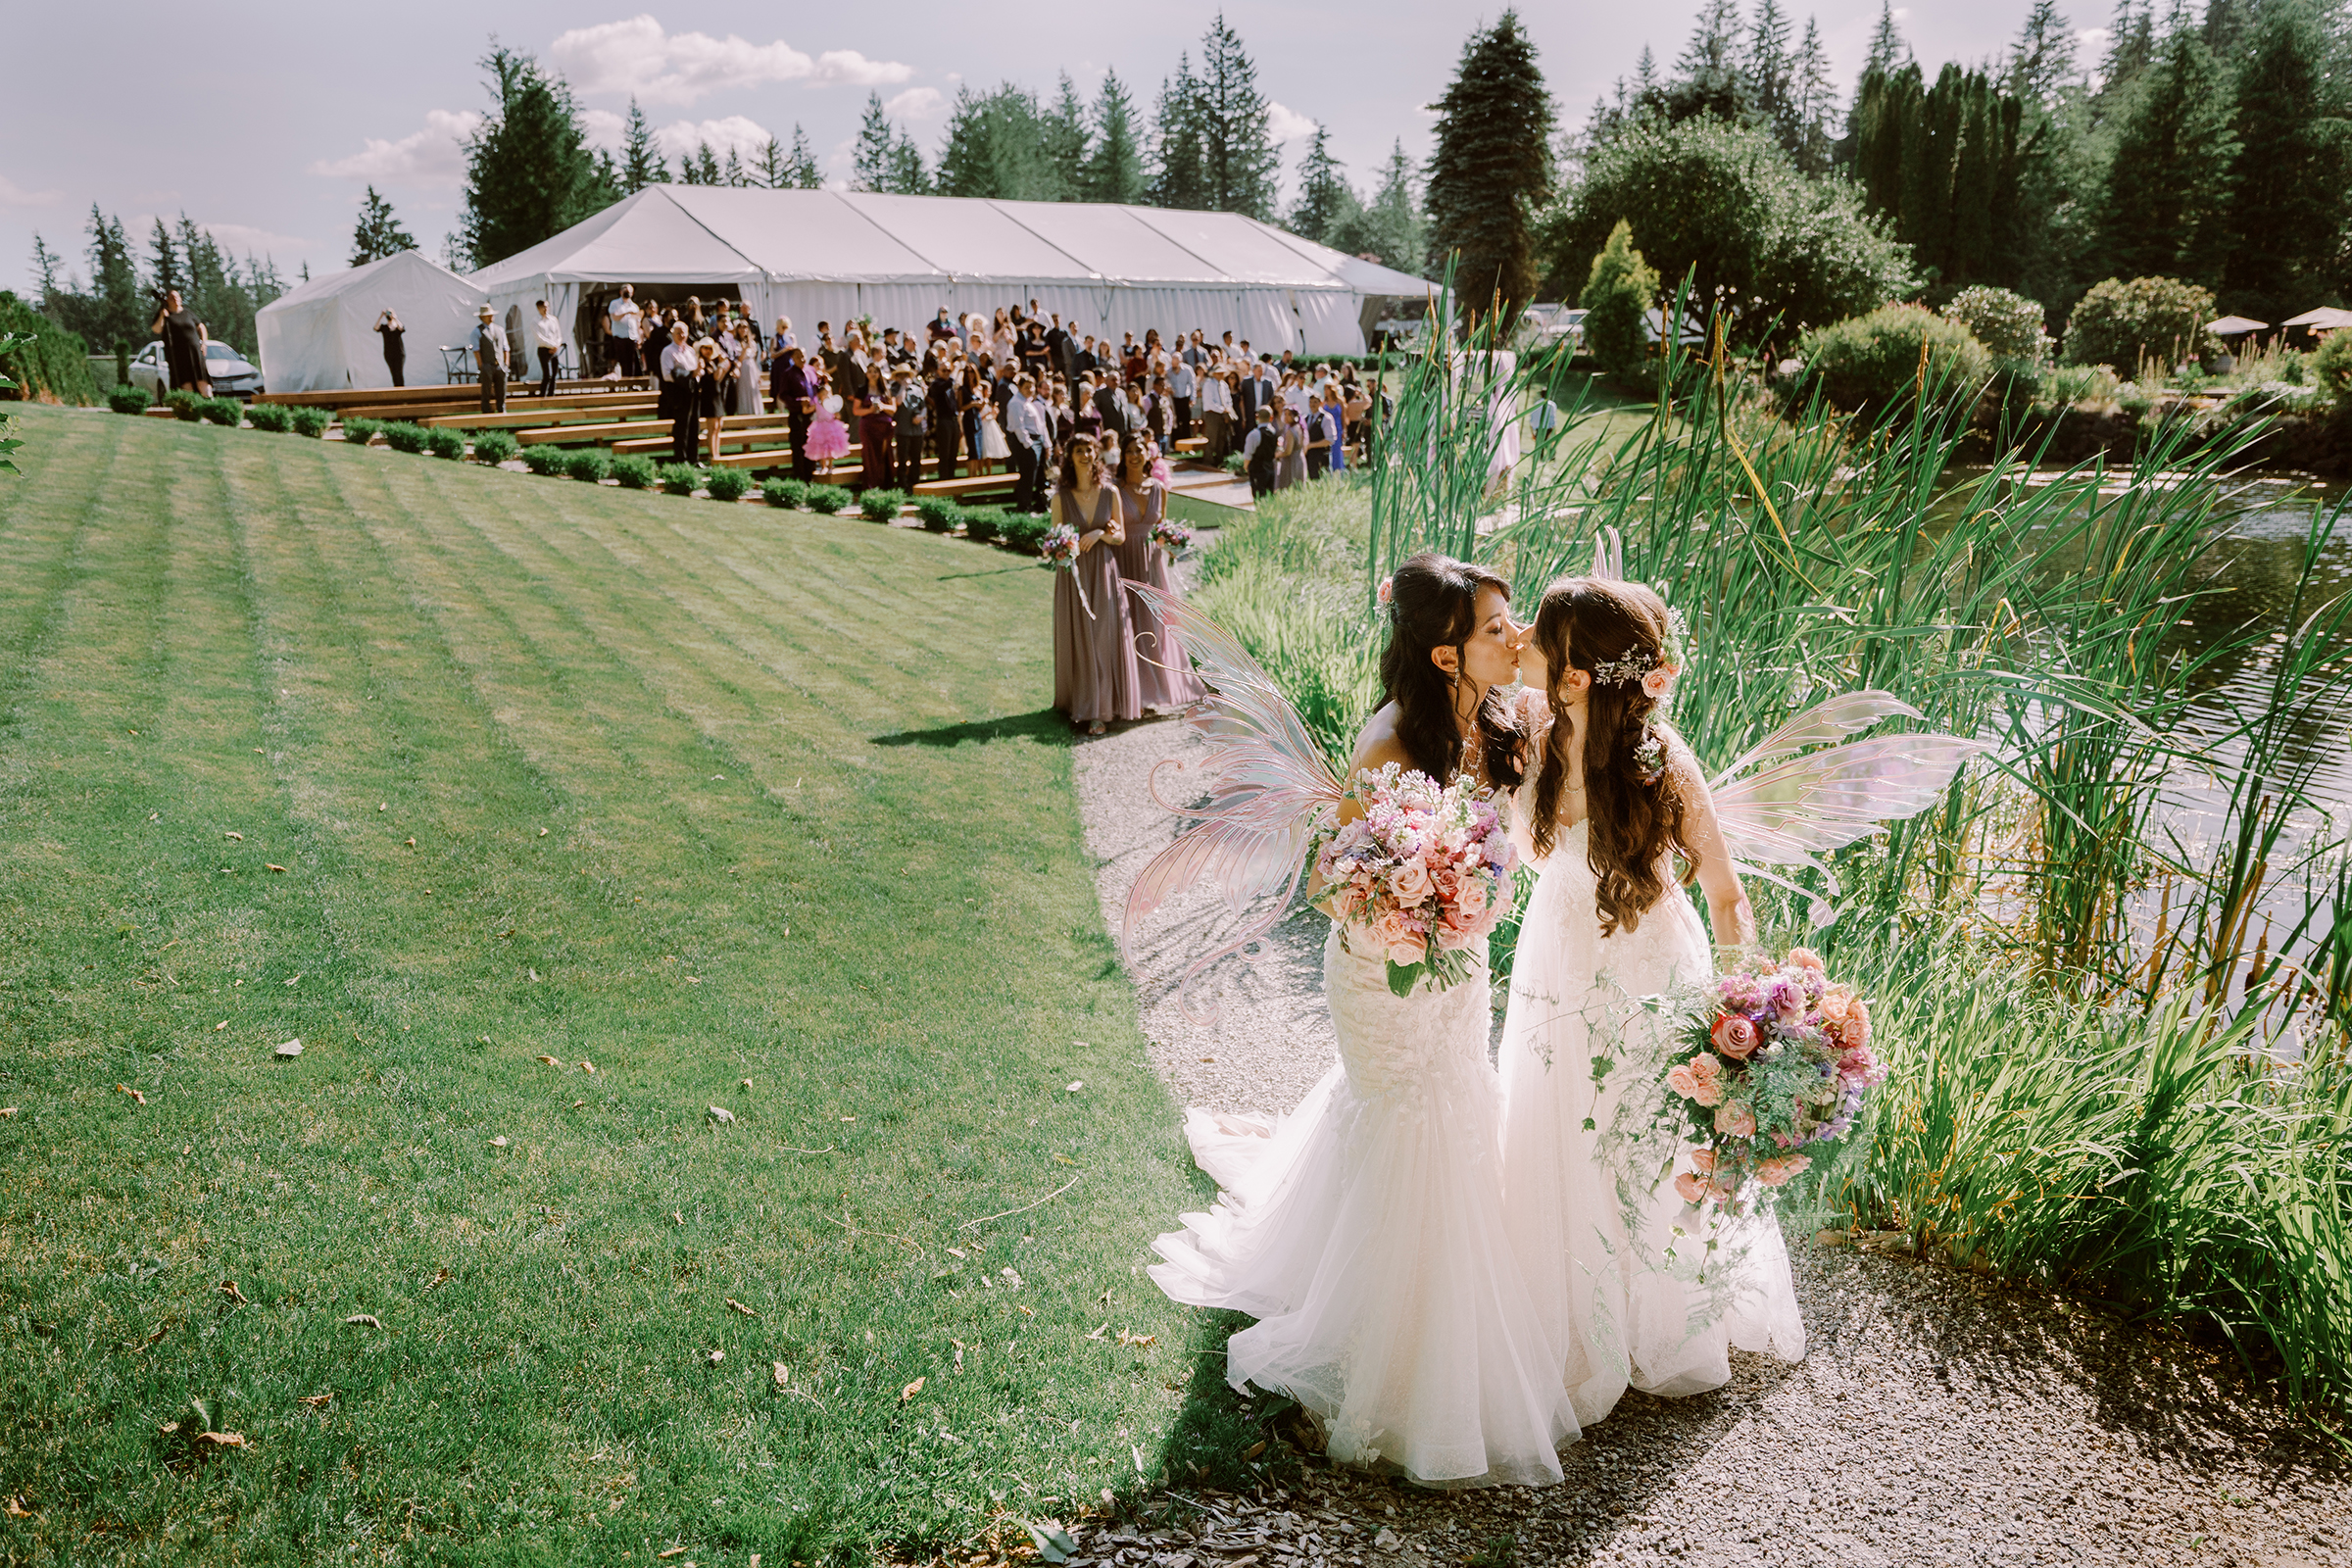 Megan and Erika's wedding ceremony at Graybridge Venue, Snohomish WA